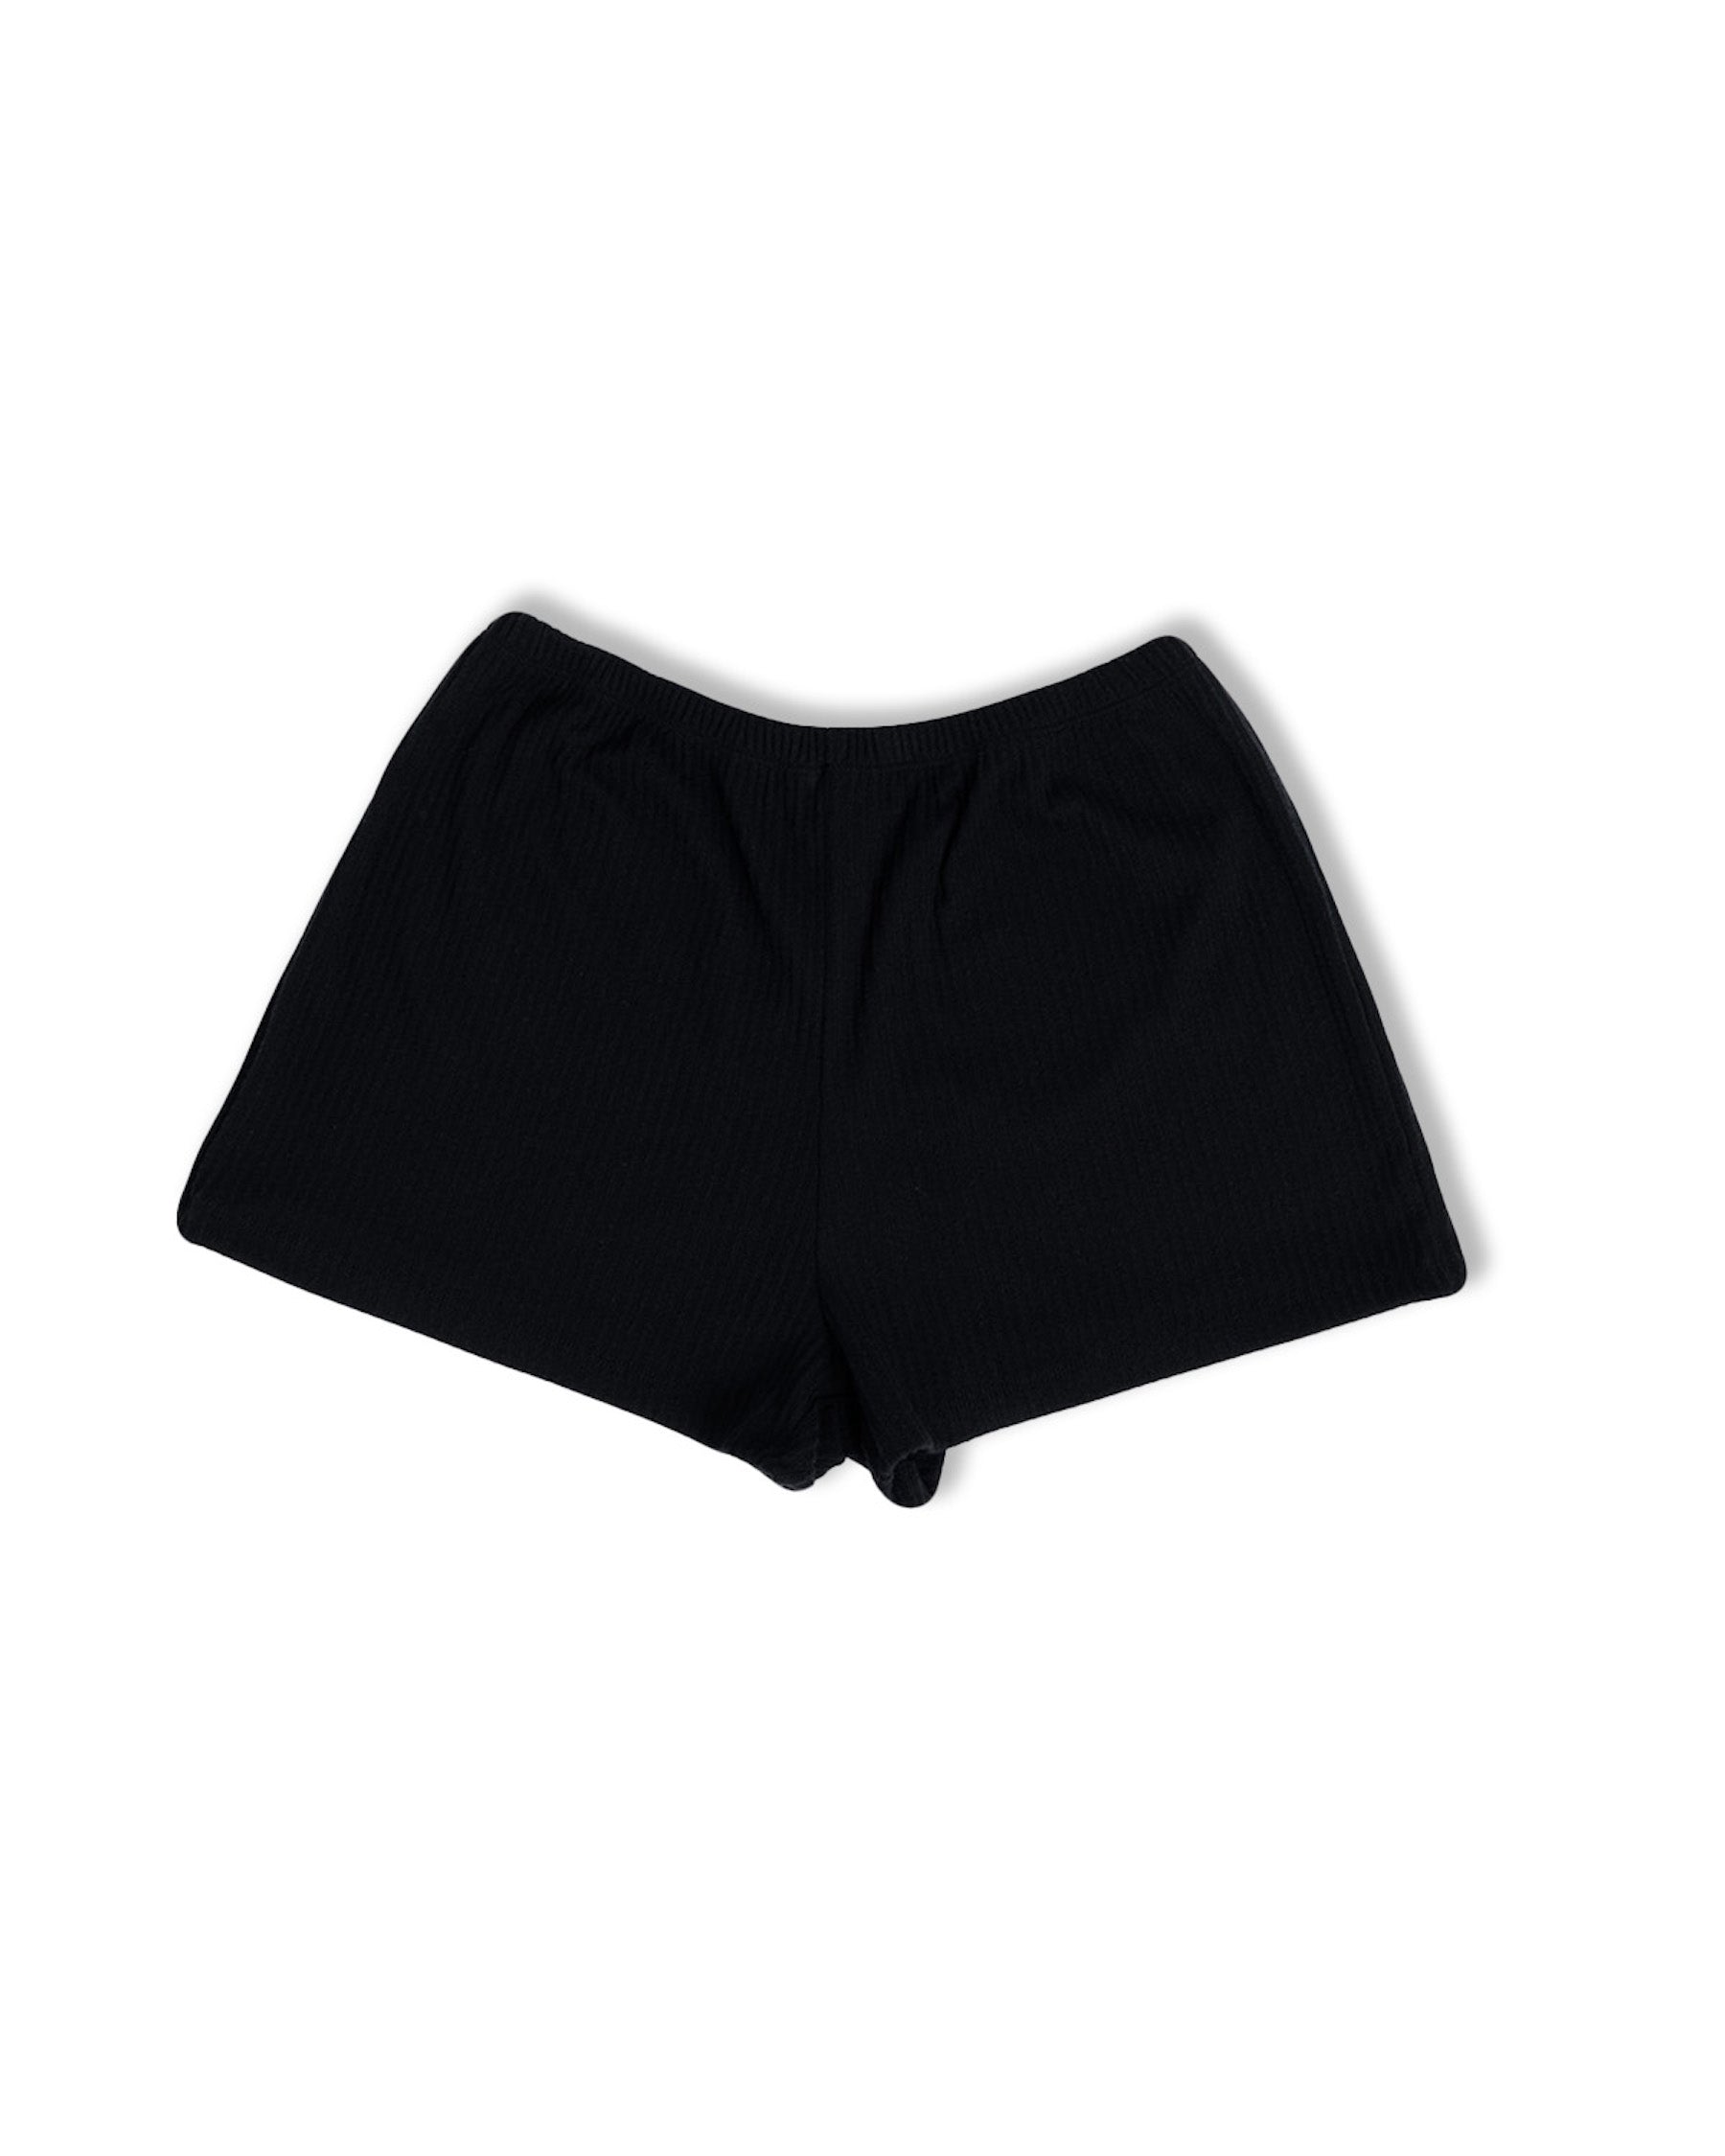 Women's Lounge Shorts - Onyx